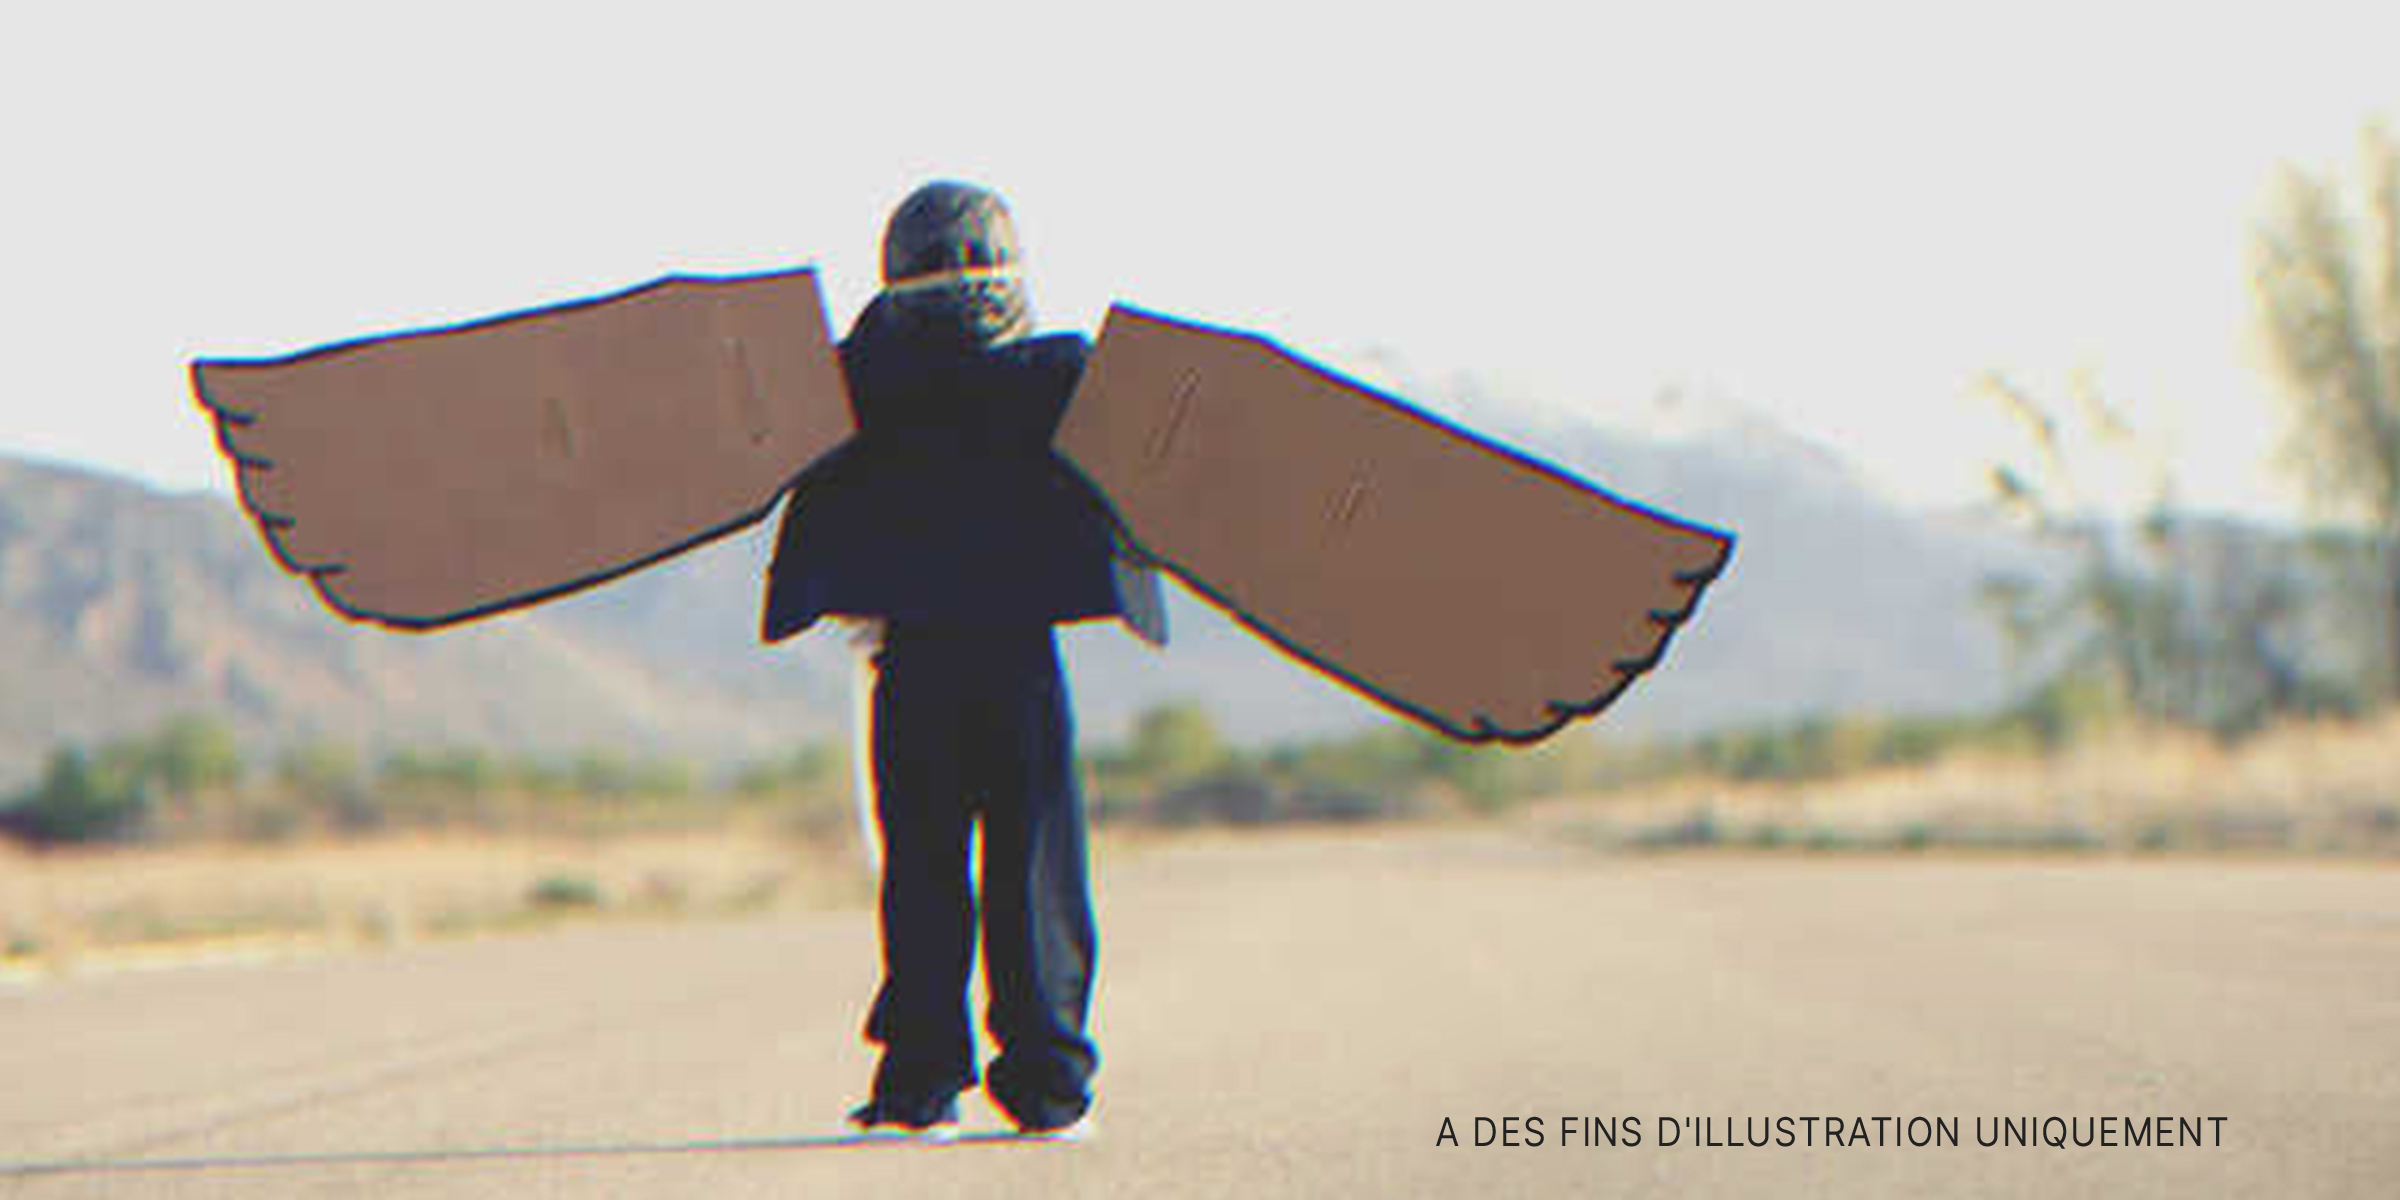 Un garçon avec des ailes en carton | Source : Shutterstock